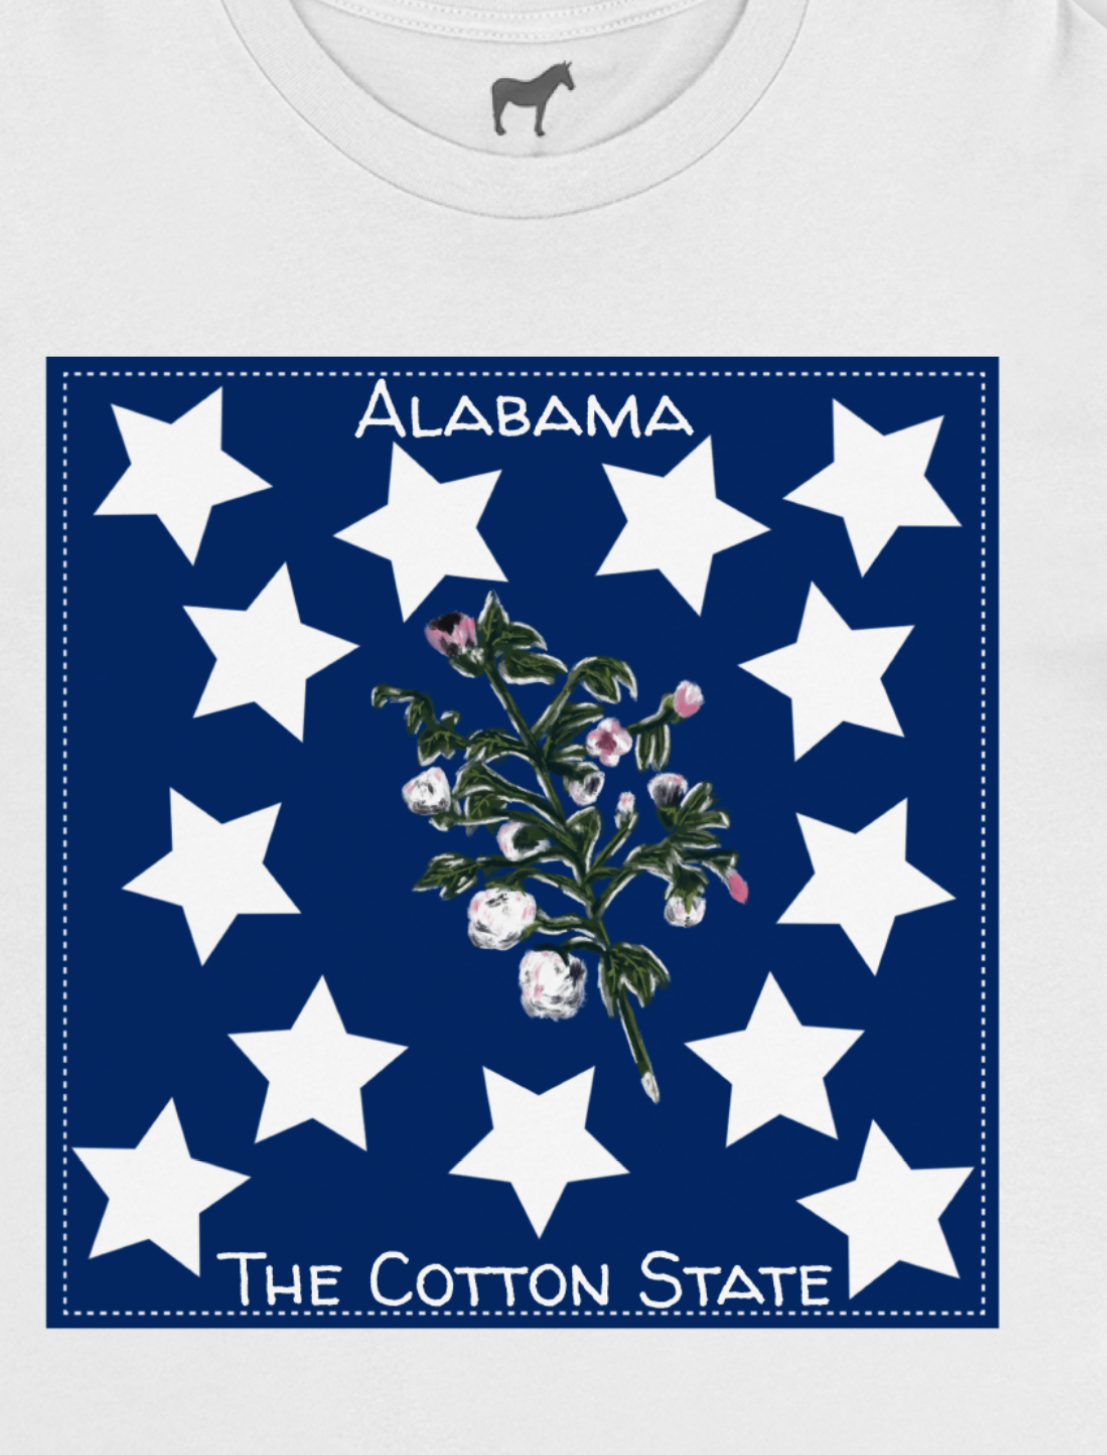 Alabama - The Cotton State Shirt